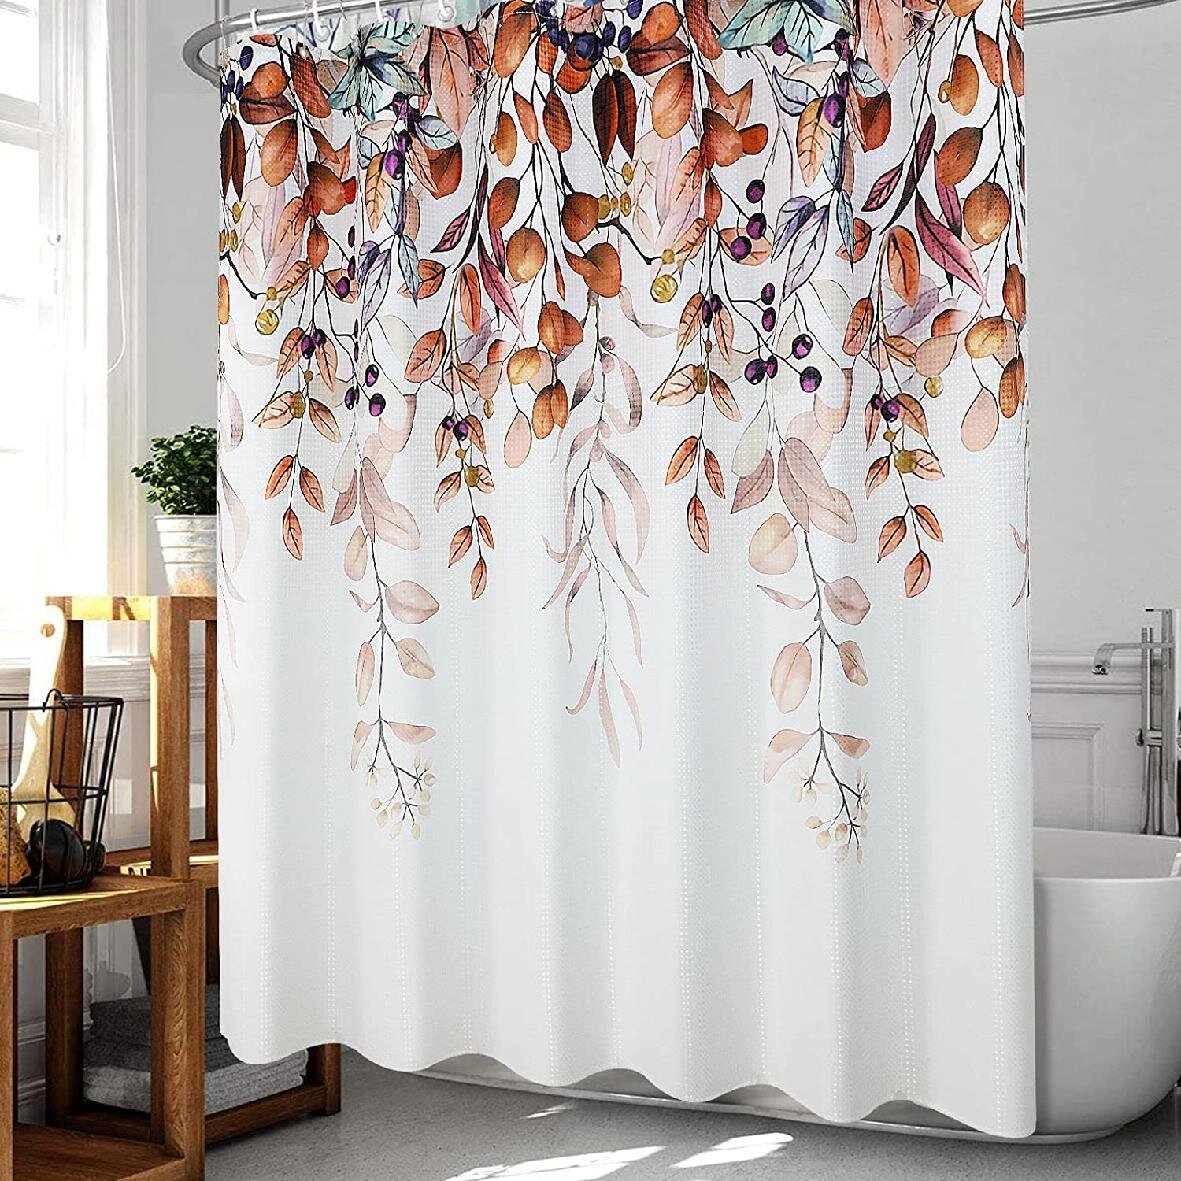 Custom tree of life Shower Curtain Bathroom Decor Fabric & 12hooks 71*71inches 